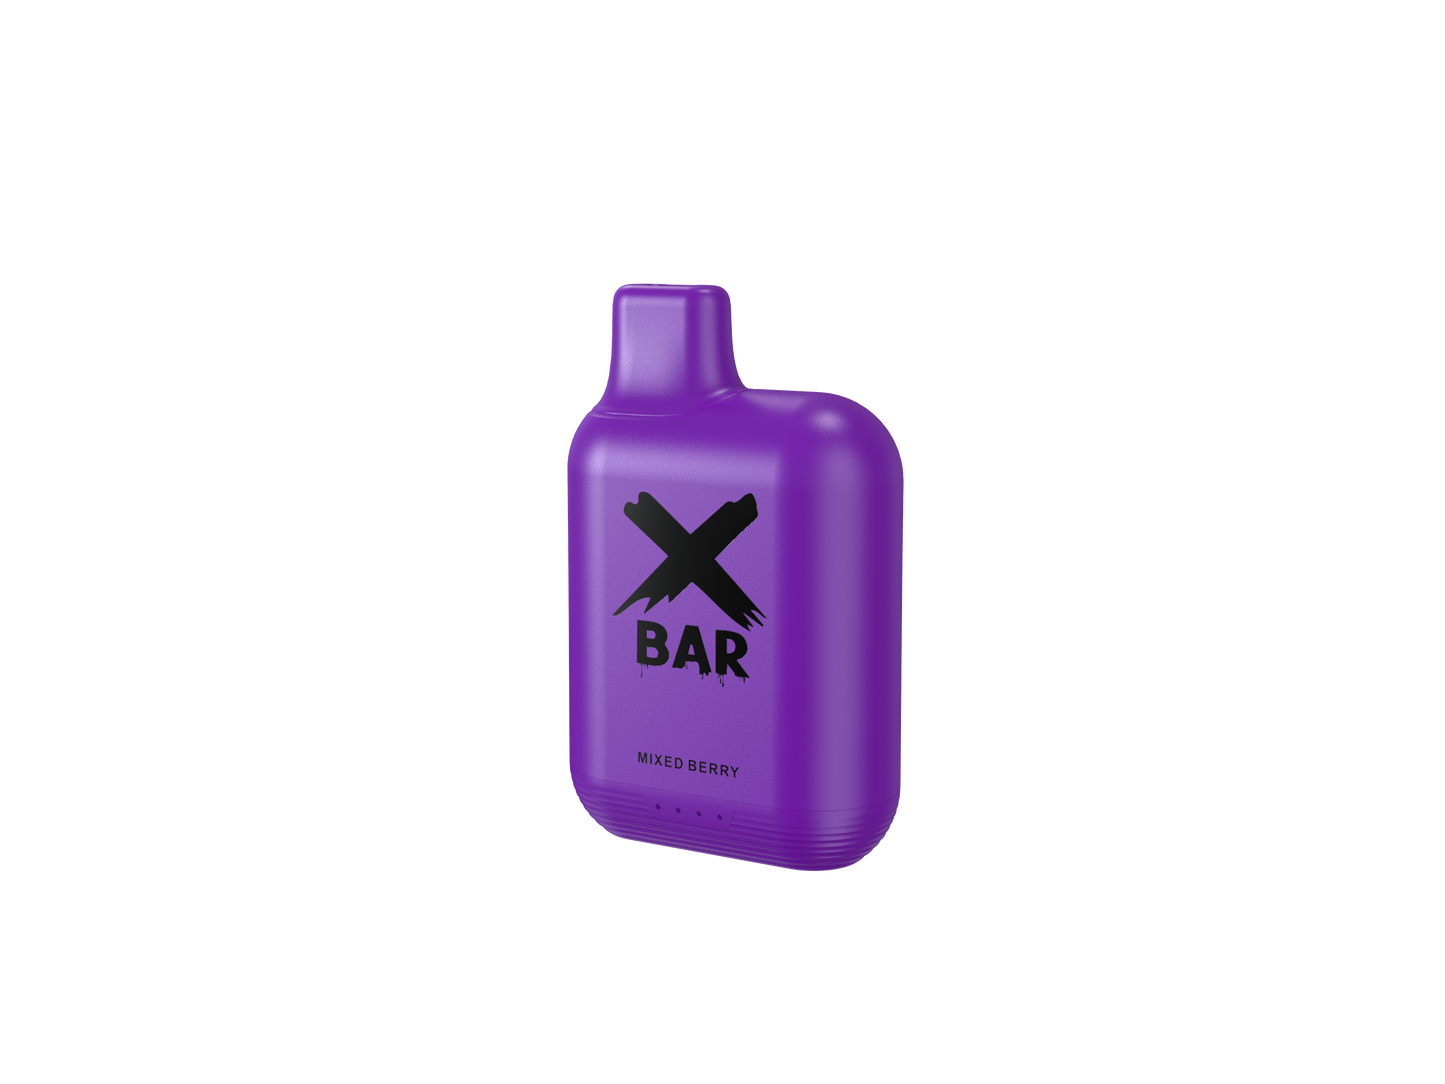 X Bar Mixed Berry